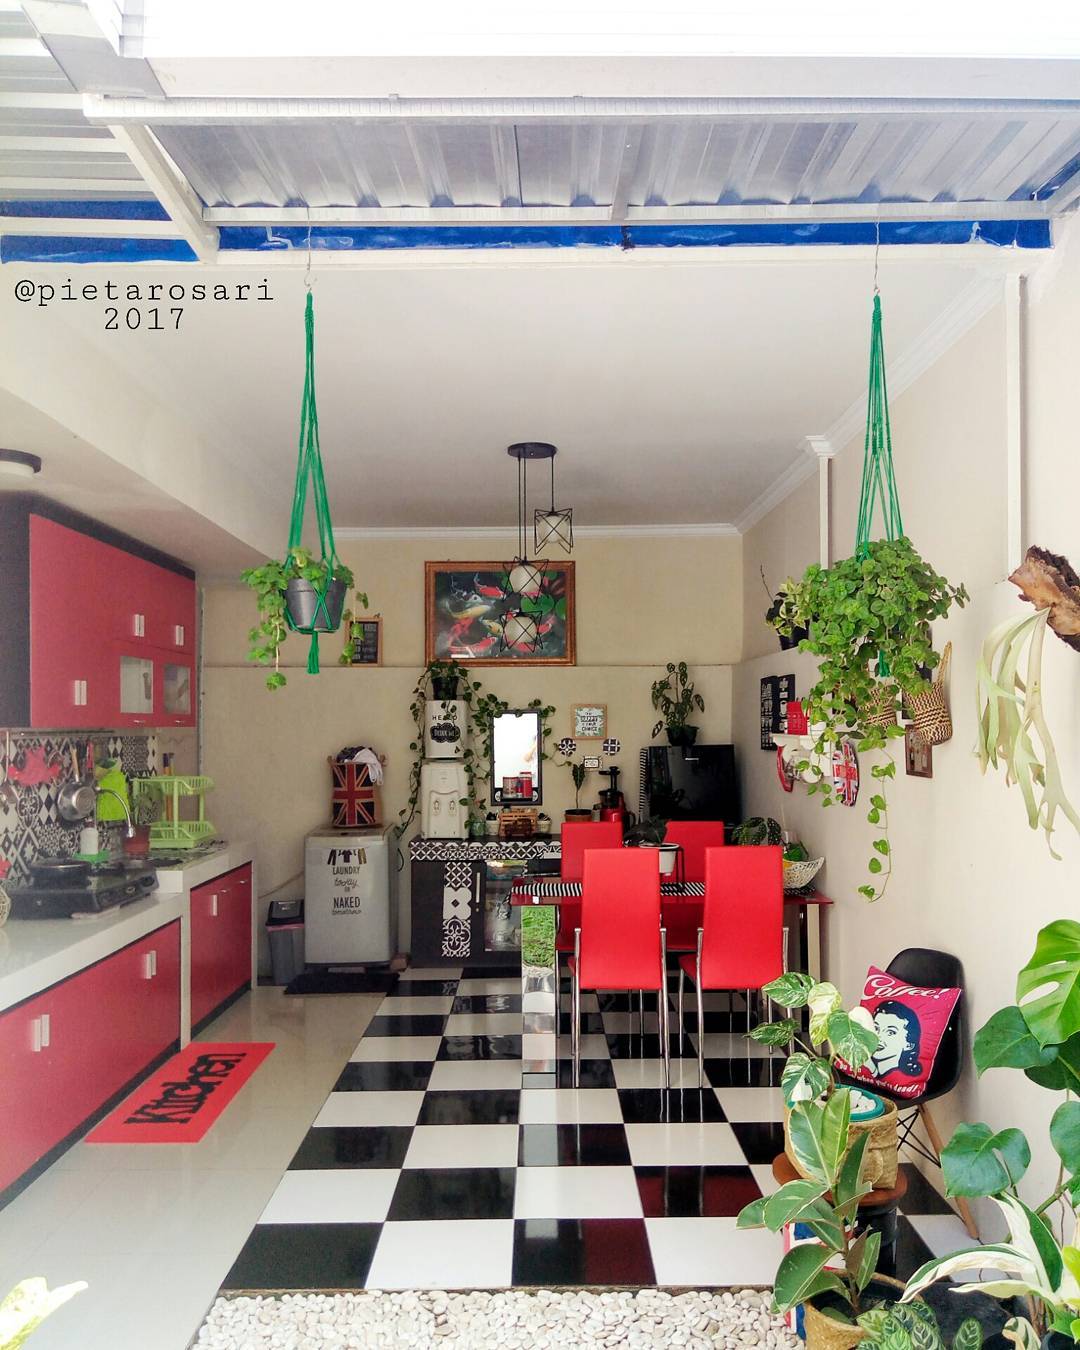 83 Kumpulan Desain Dapur Minimalis Dengan Taman Yang Belum Banyak Diketahui